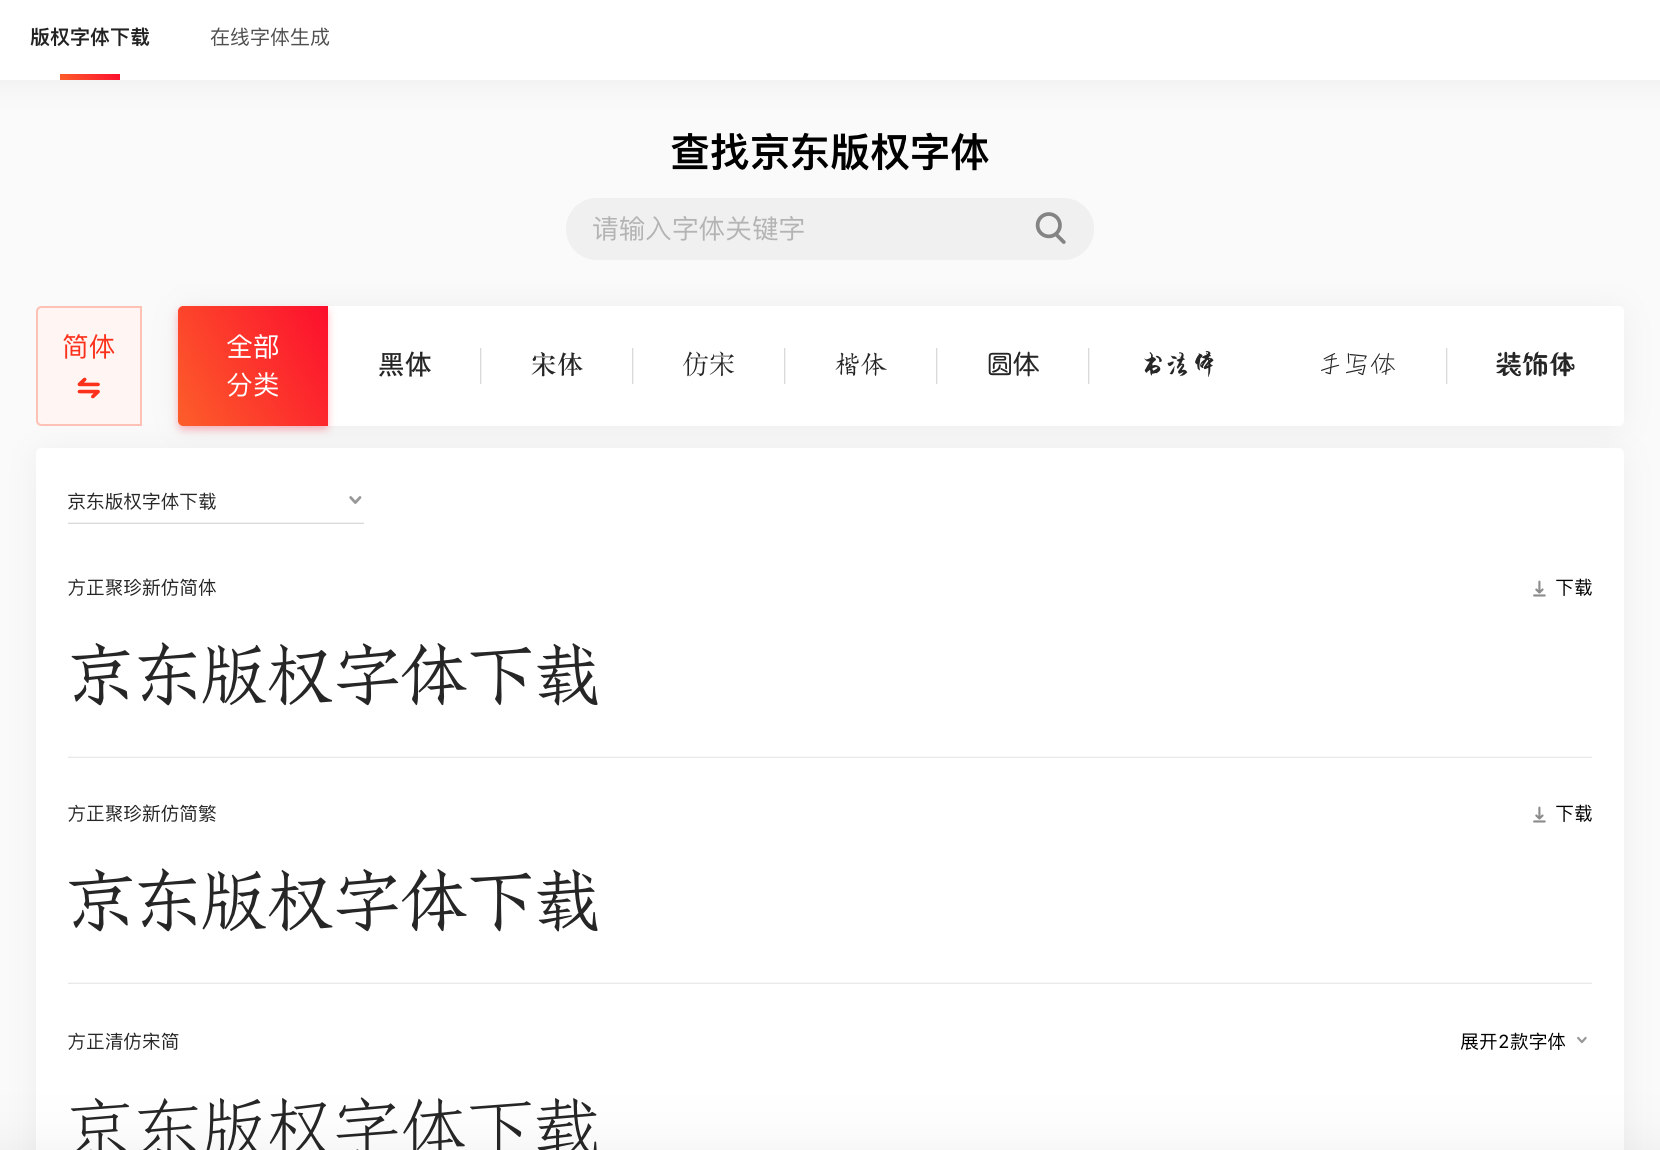  Web Chinese font processing summary1